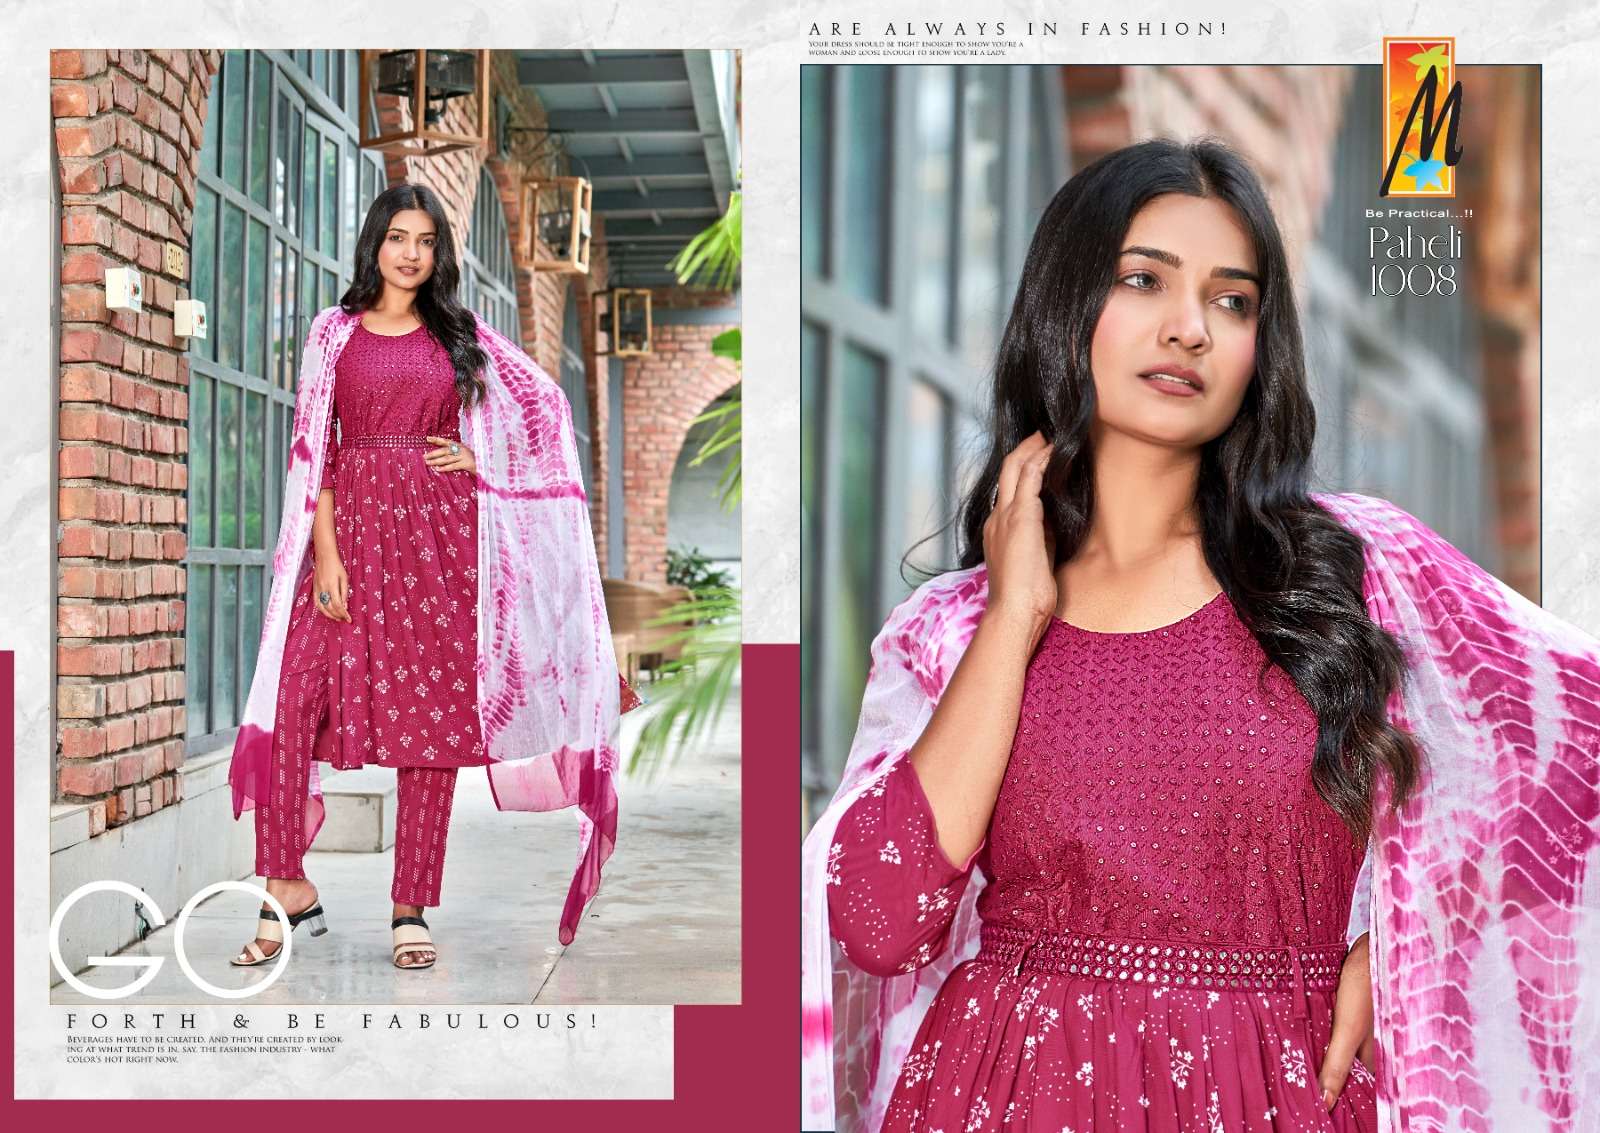 master paheli trendy look nayra cut designer kurtis catalogue online supplier surat